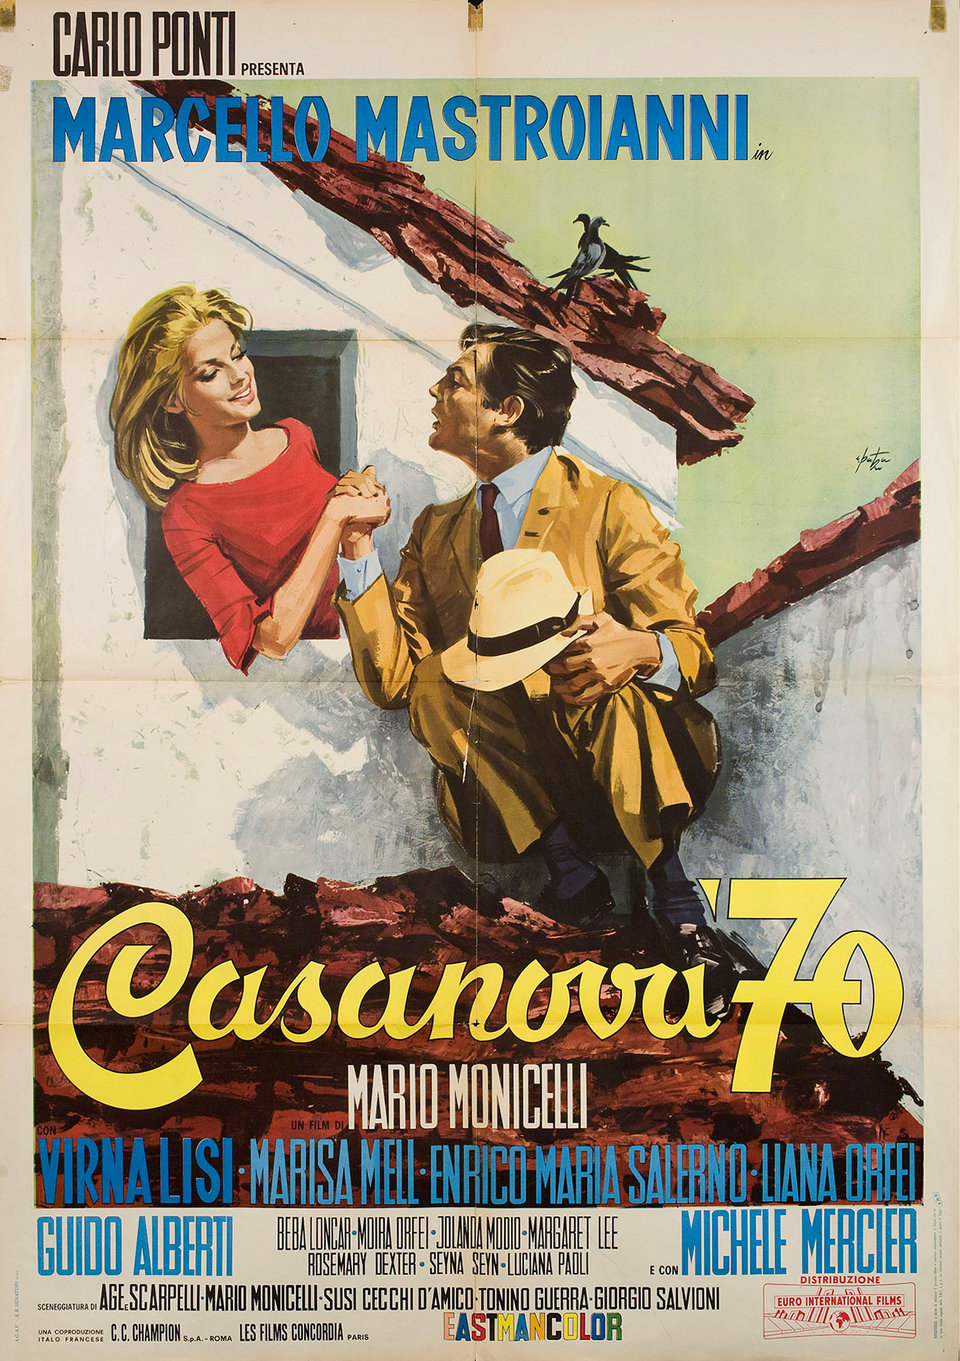 Casanova 70 (1965) with English Subtitles on DVD on DVD